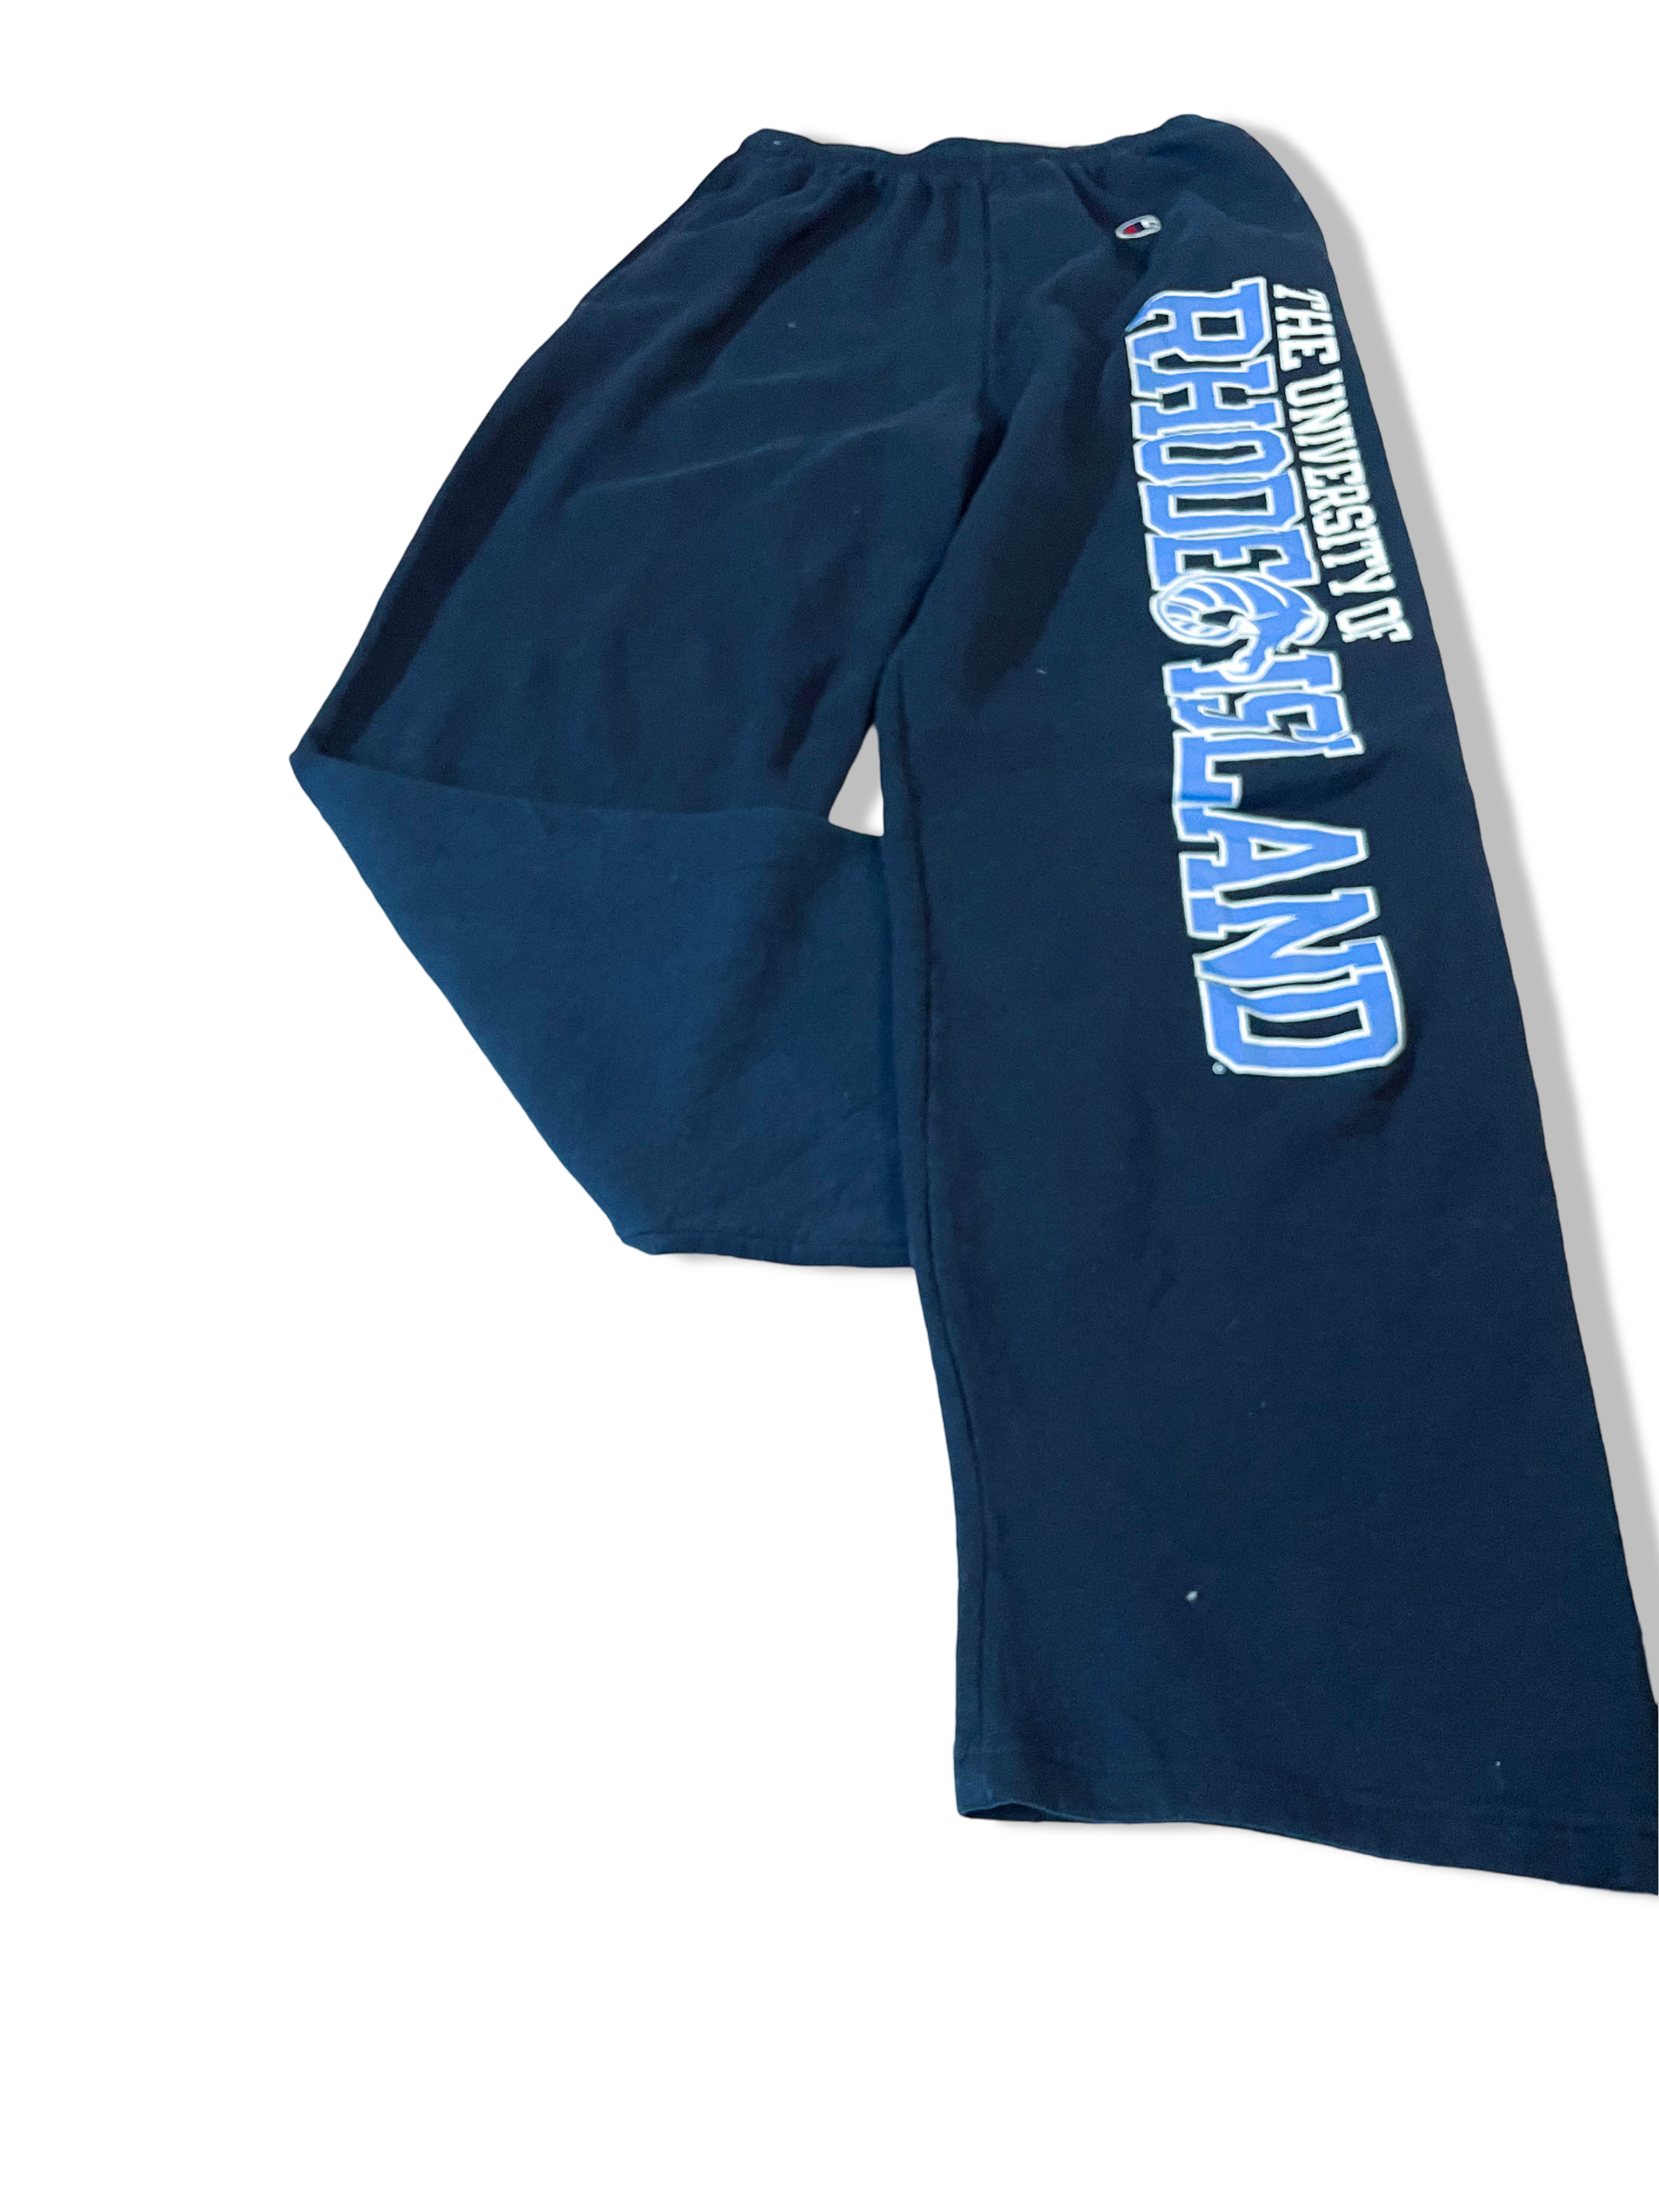 Vintage Champion The university of Rhodes Island Navy fleece sweat pant in S|L28 W22|SKU 4010